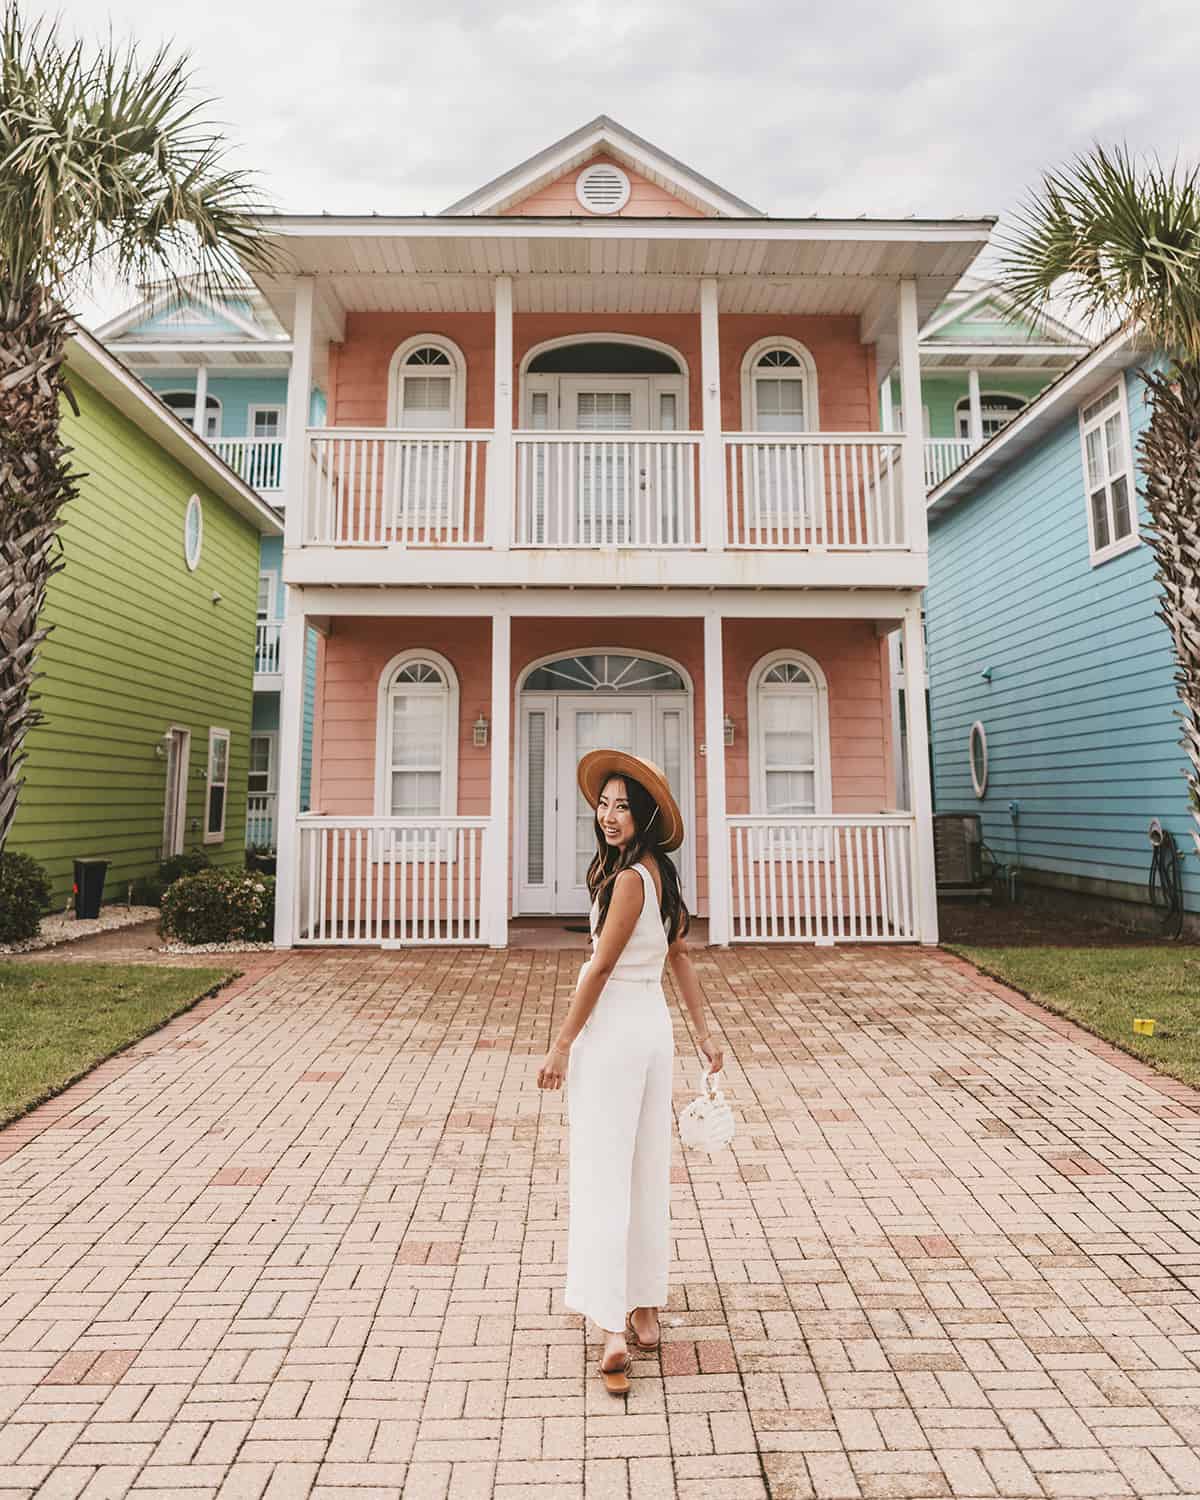 Rainbow houses in Panama City Florida